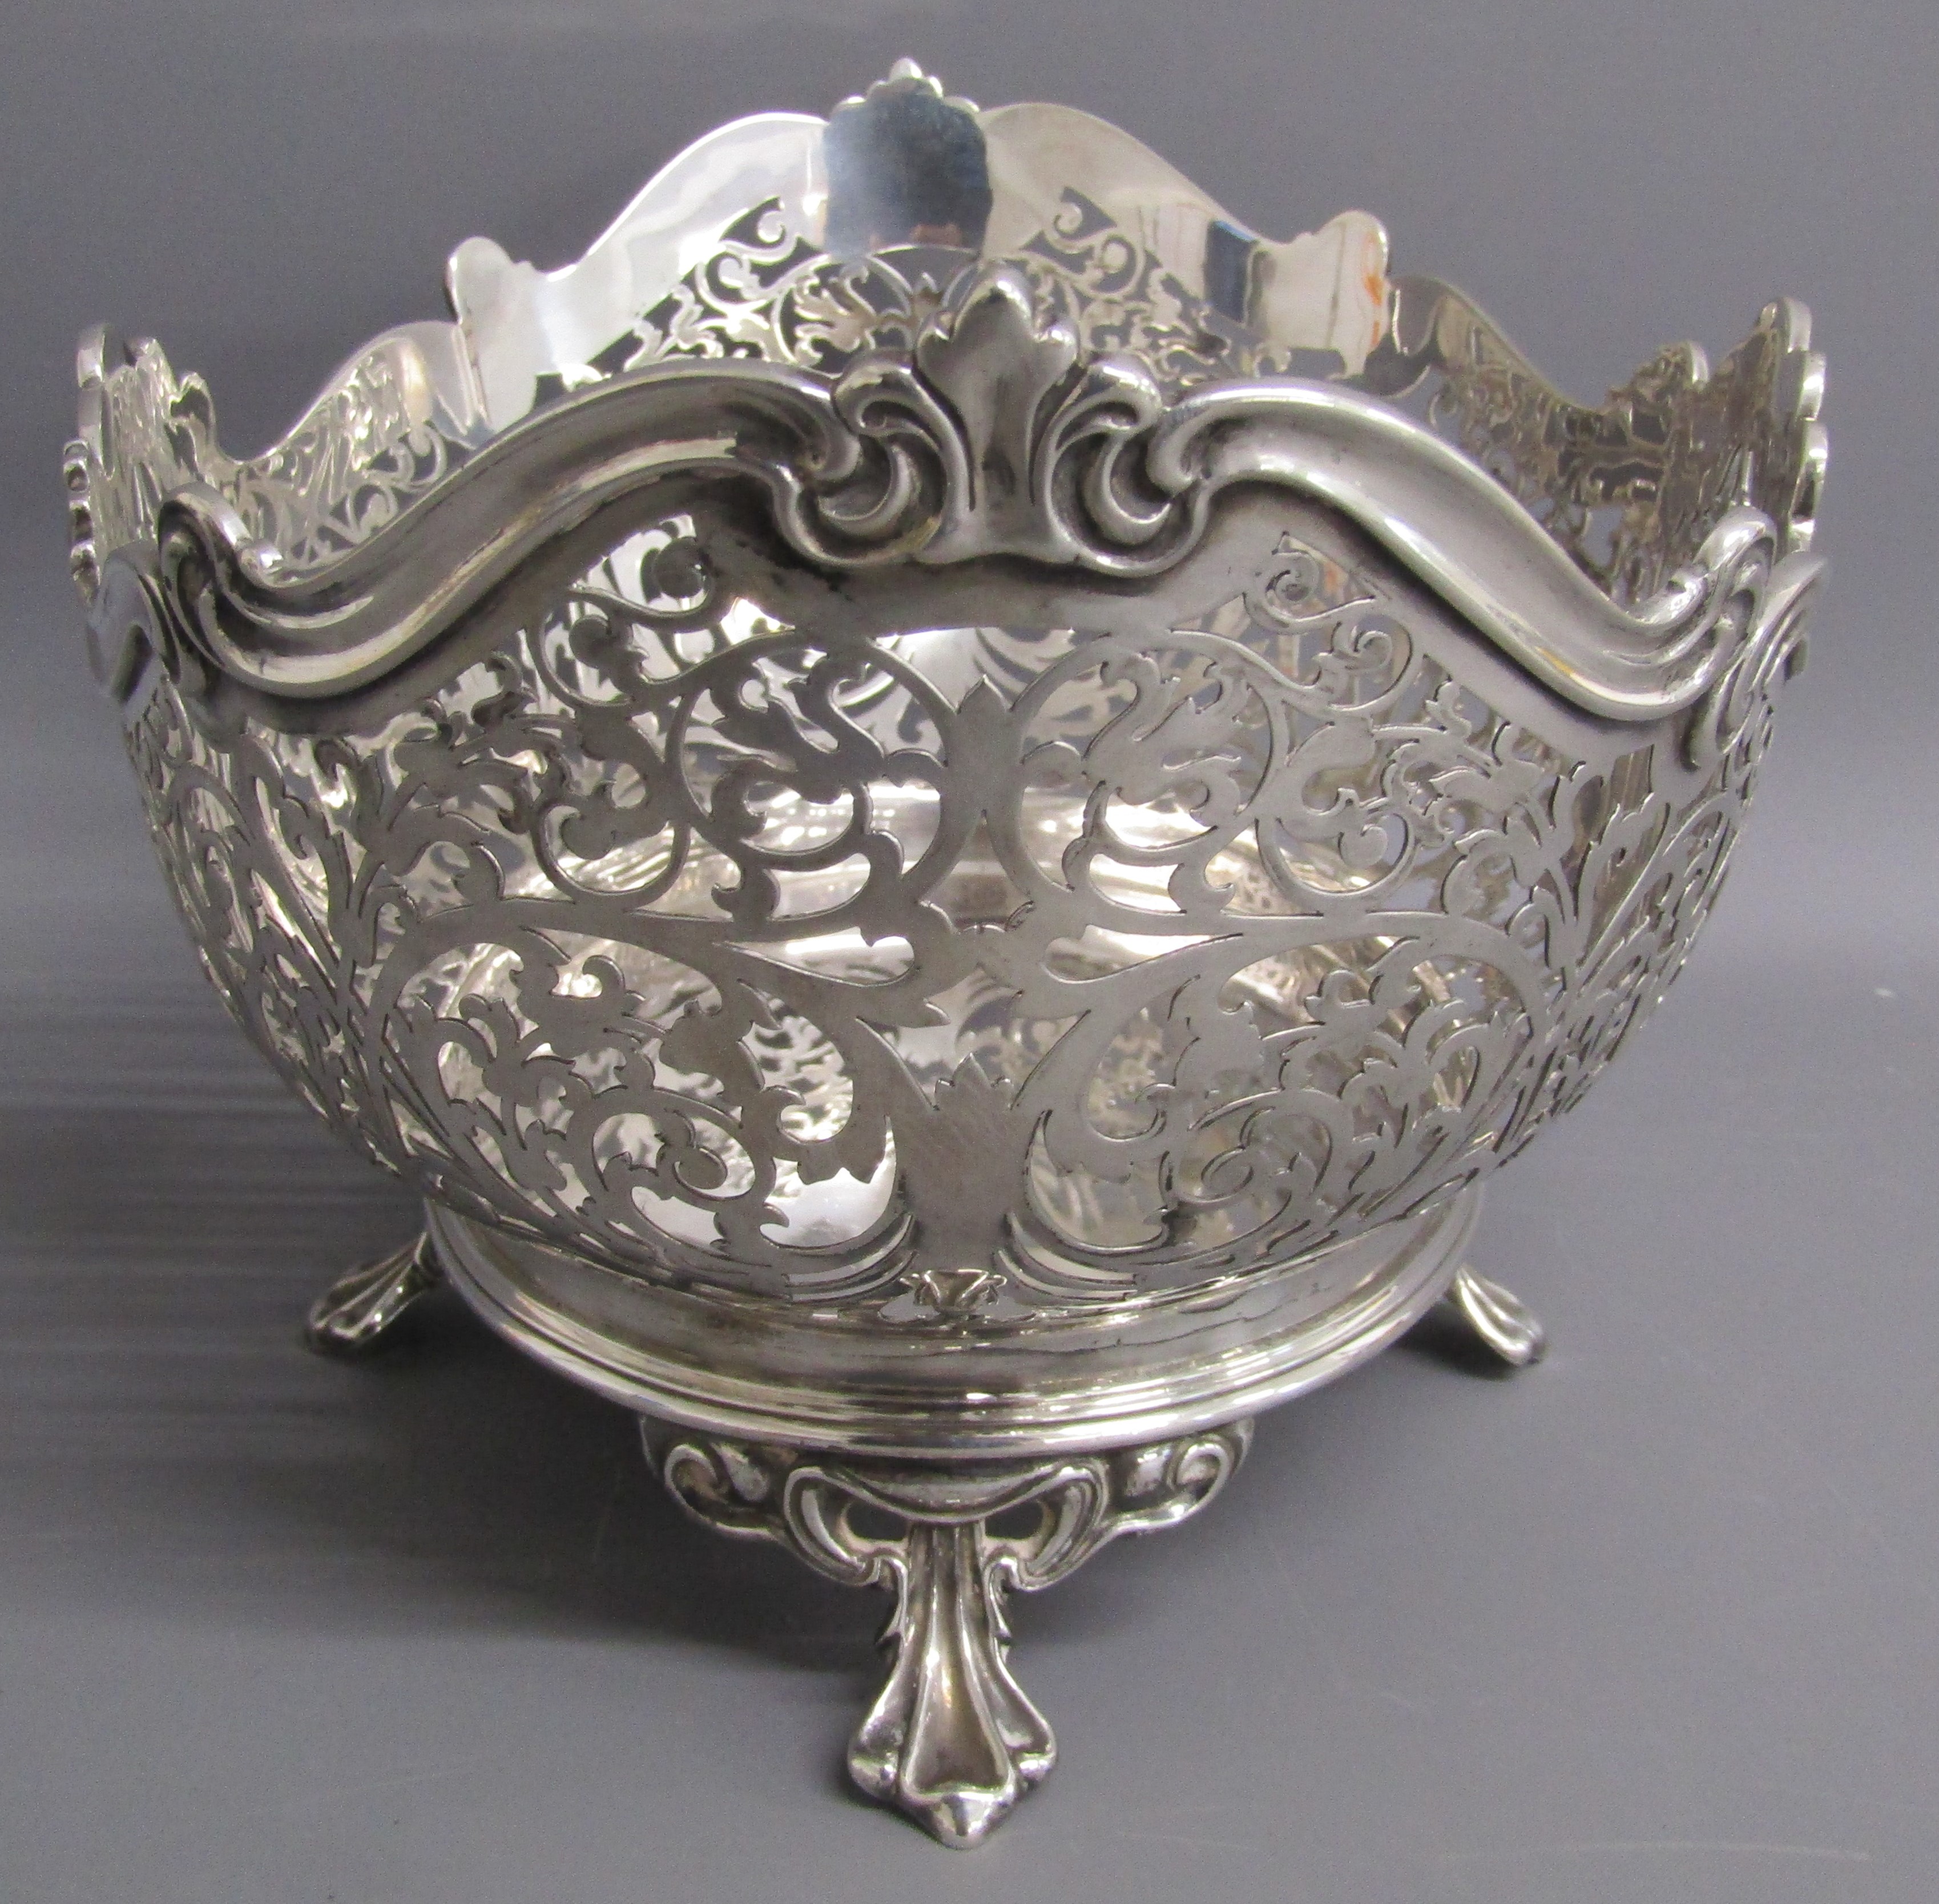 Atkin Brothers Sheffield 1927 silver footed bowl with pierced decoration - approx. 27.5cm x 19cm x - Bild 4 aus 11